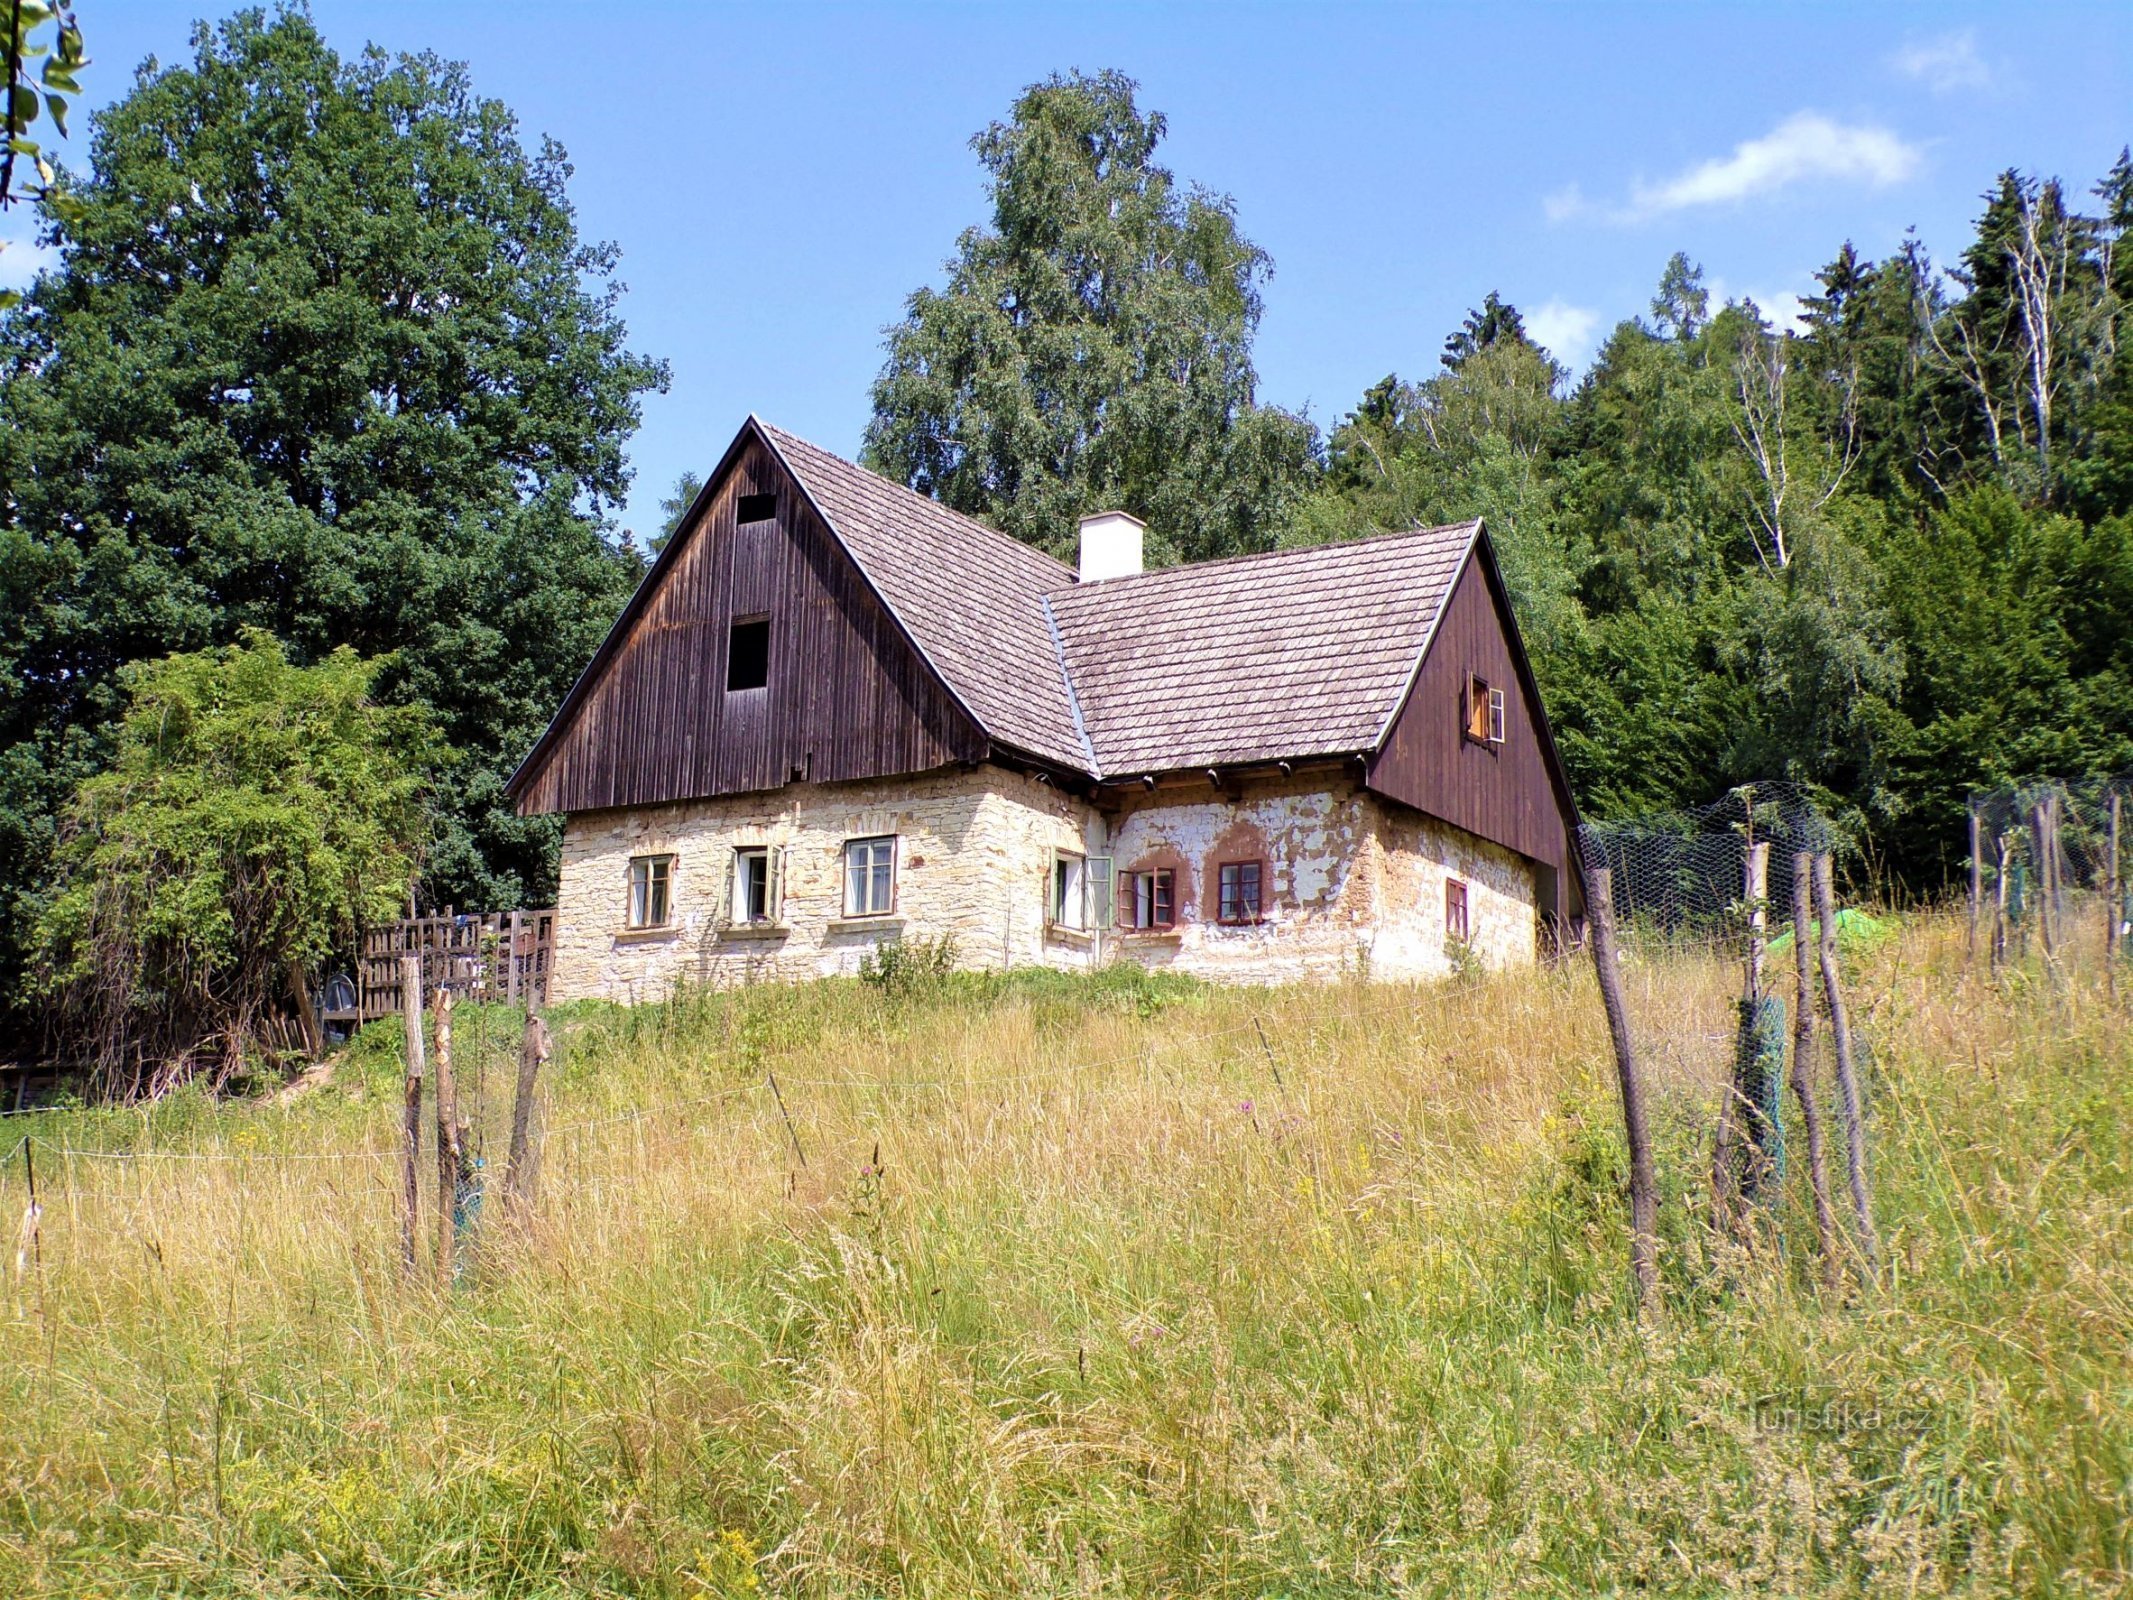 501. számú ház Bokoušban (Velká Bukovina, 13.7.2021.)